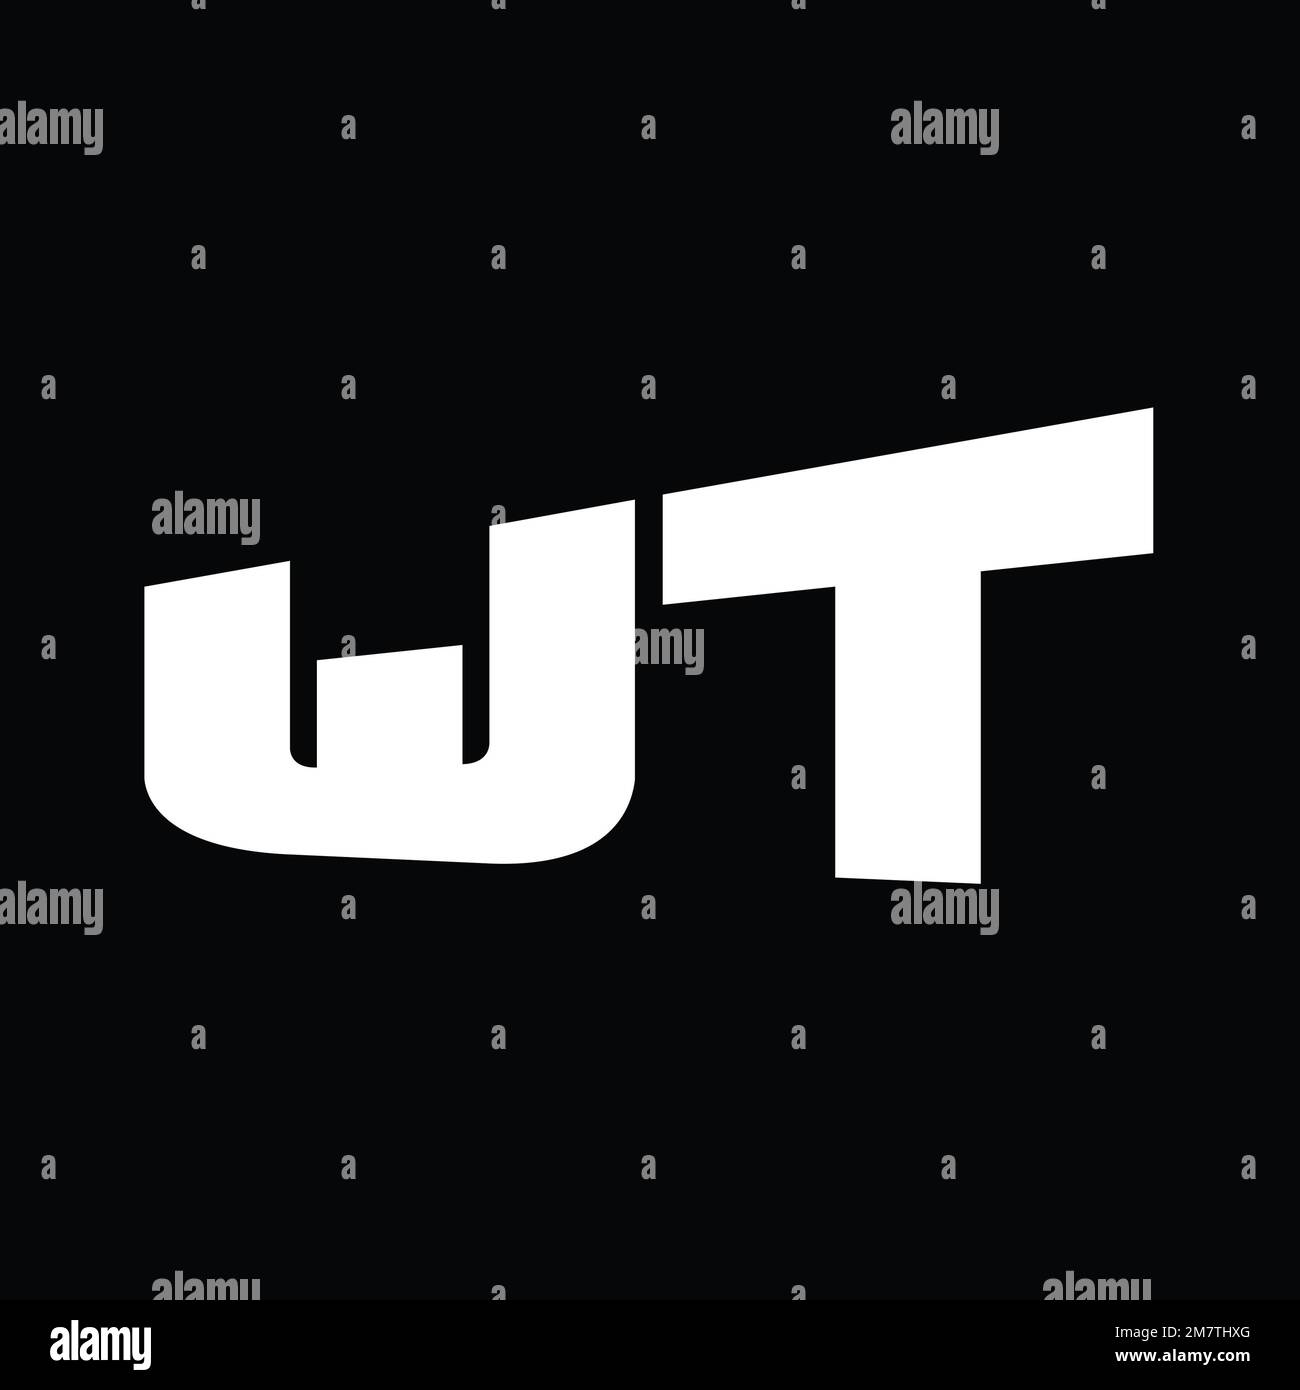 WT Logo monogram big alphabet vector images design template Stock Photo